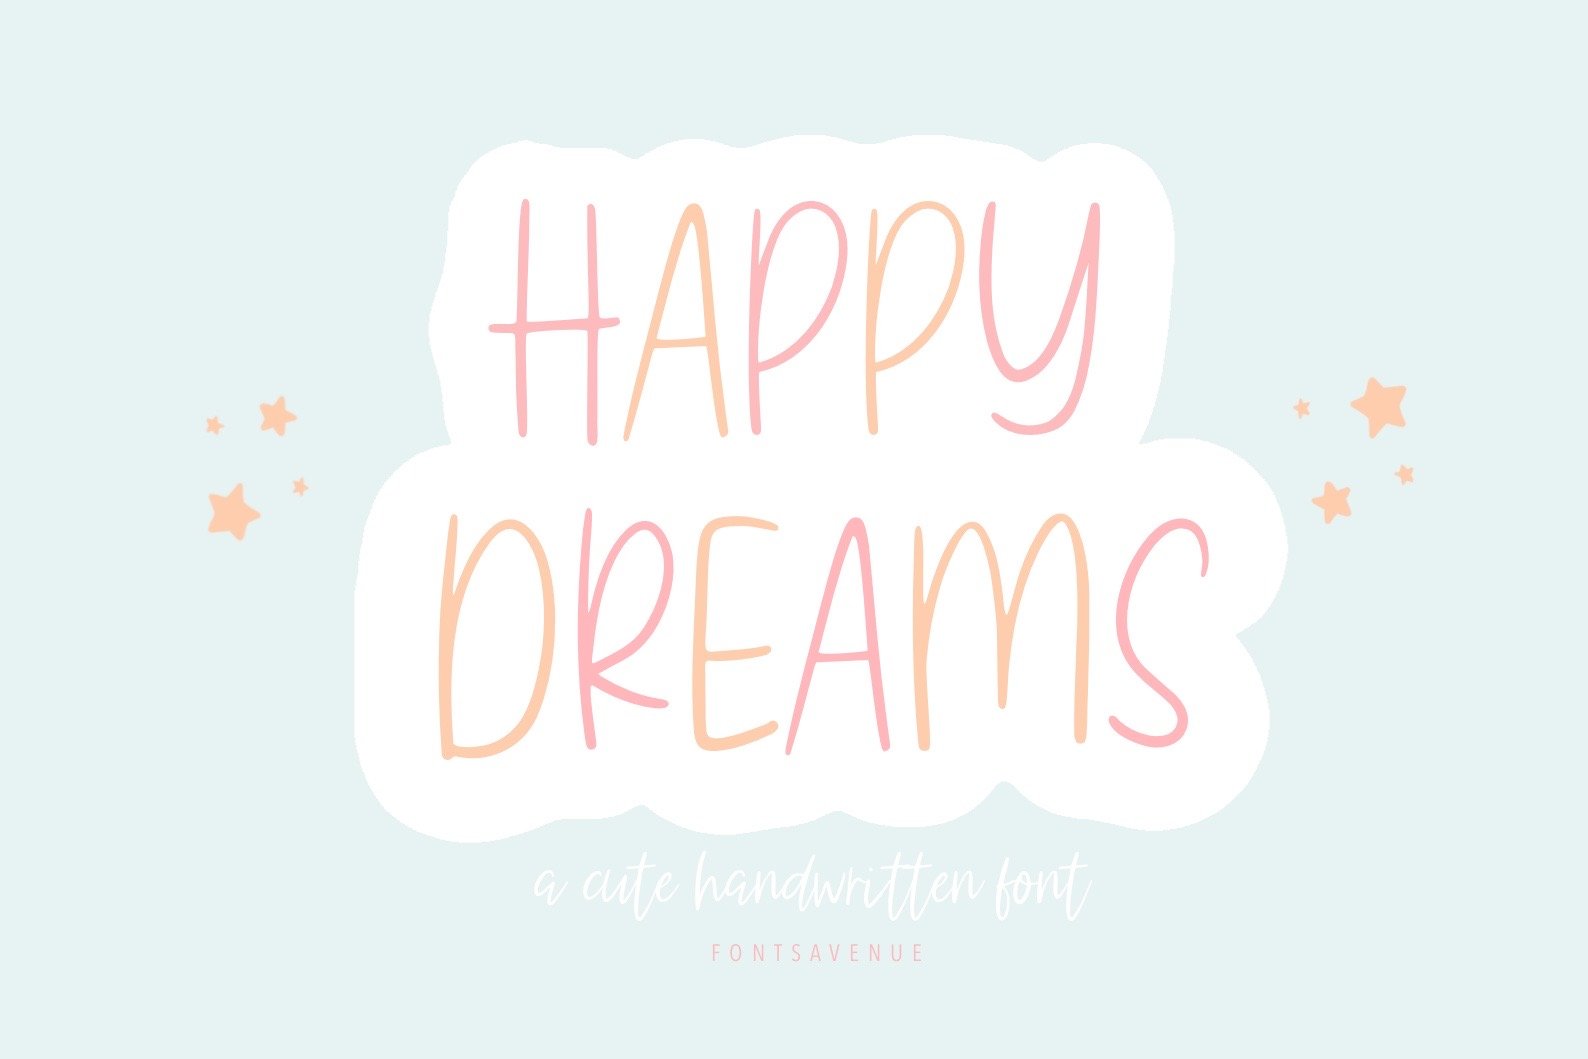 Happy Dreams | Cute Handwritten Font cover image.